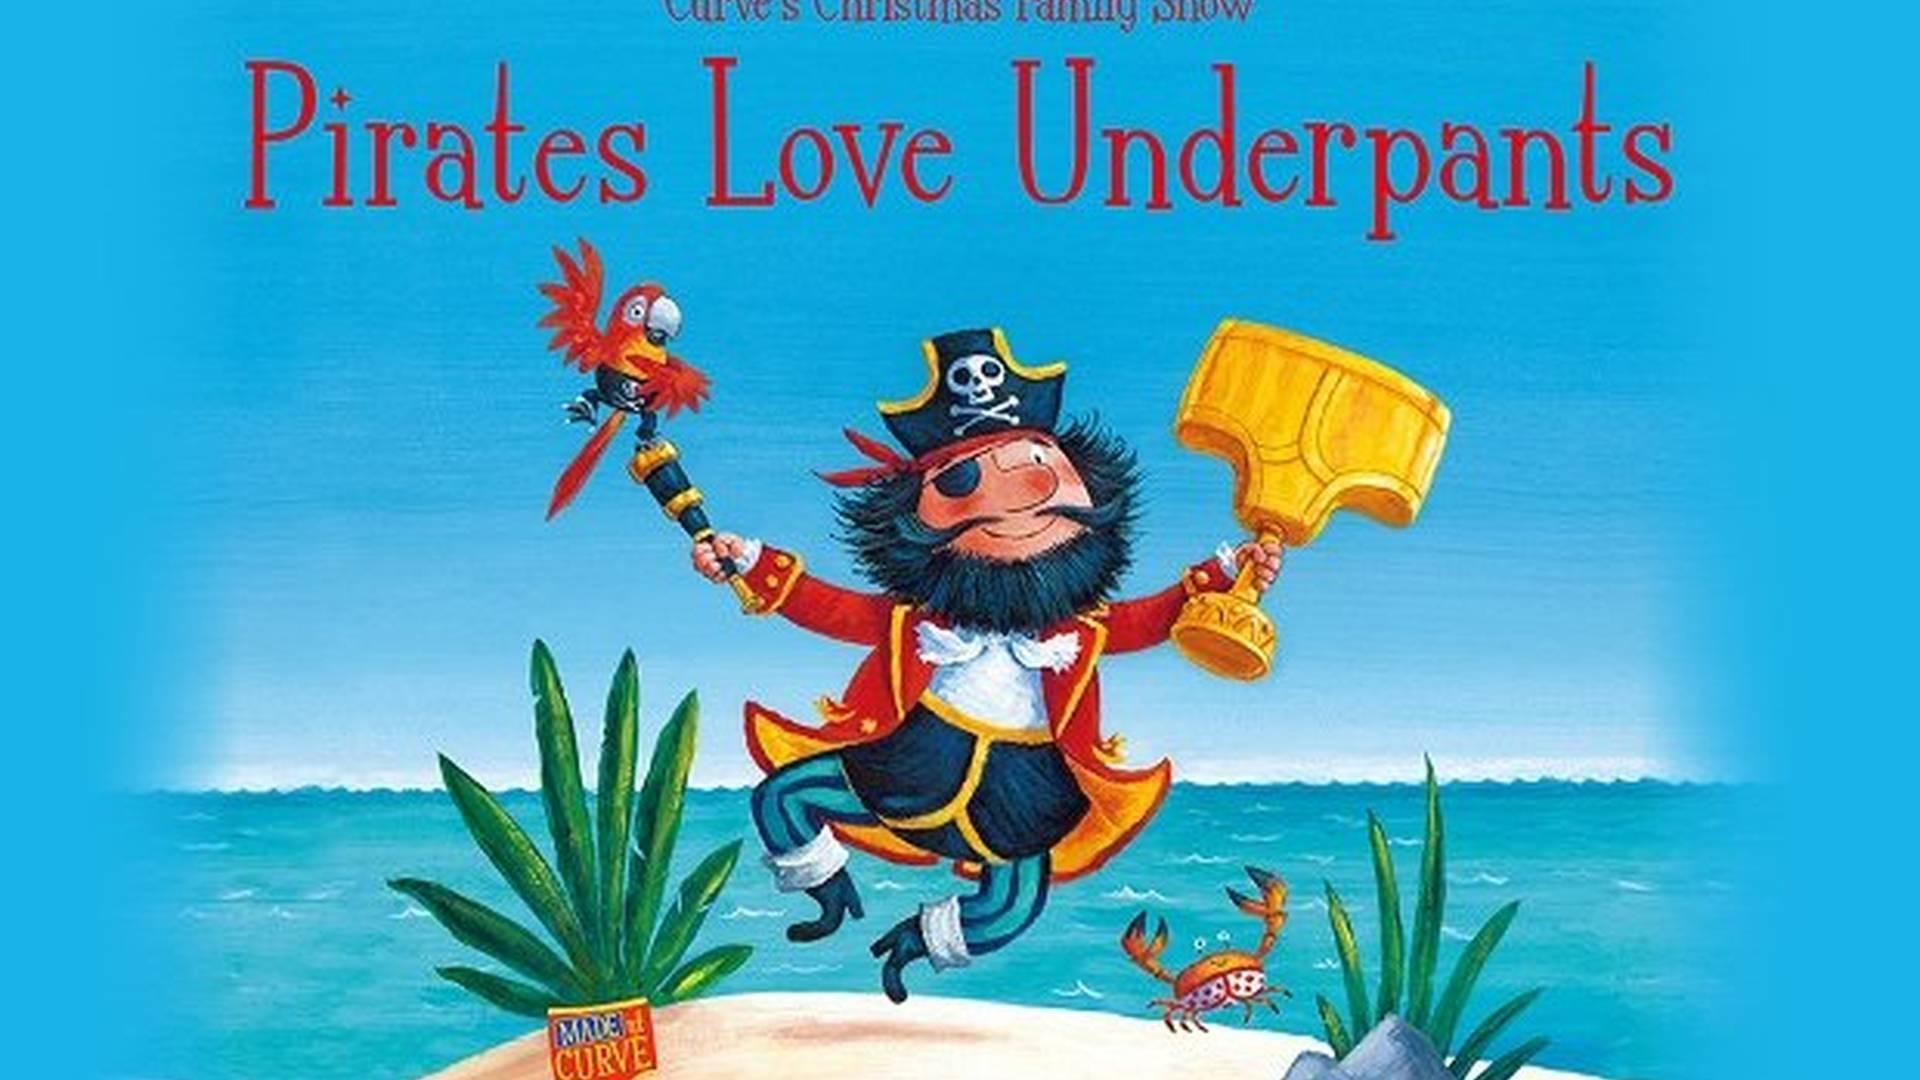 Pirates Love Underpants photo